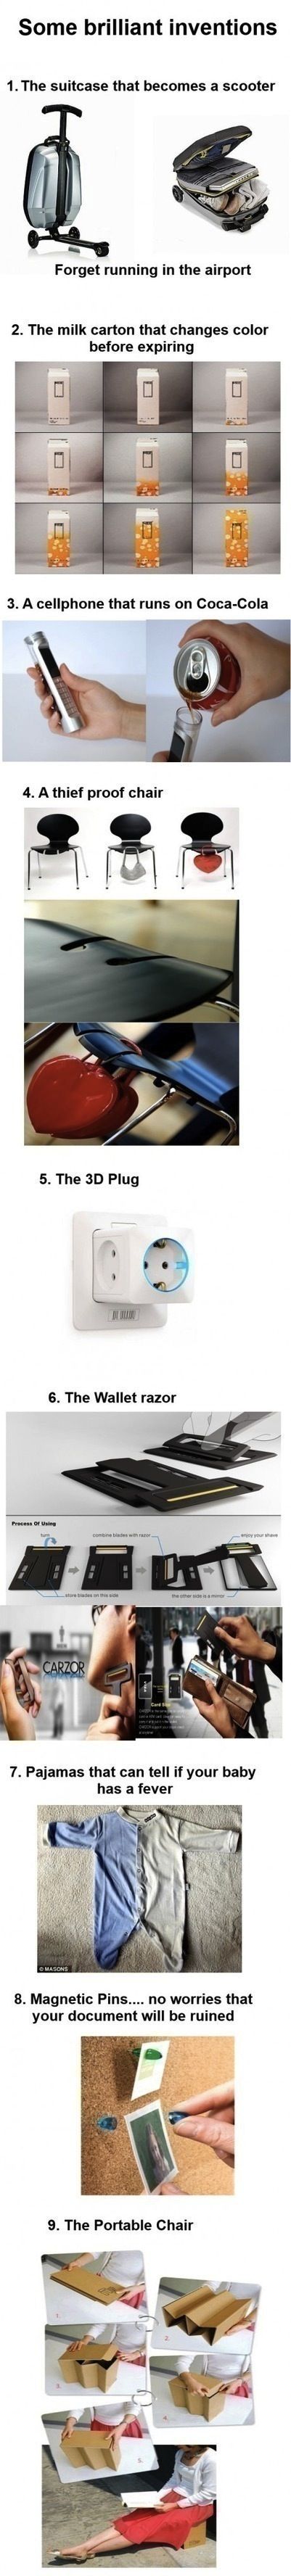 Some brilliant inventions.